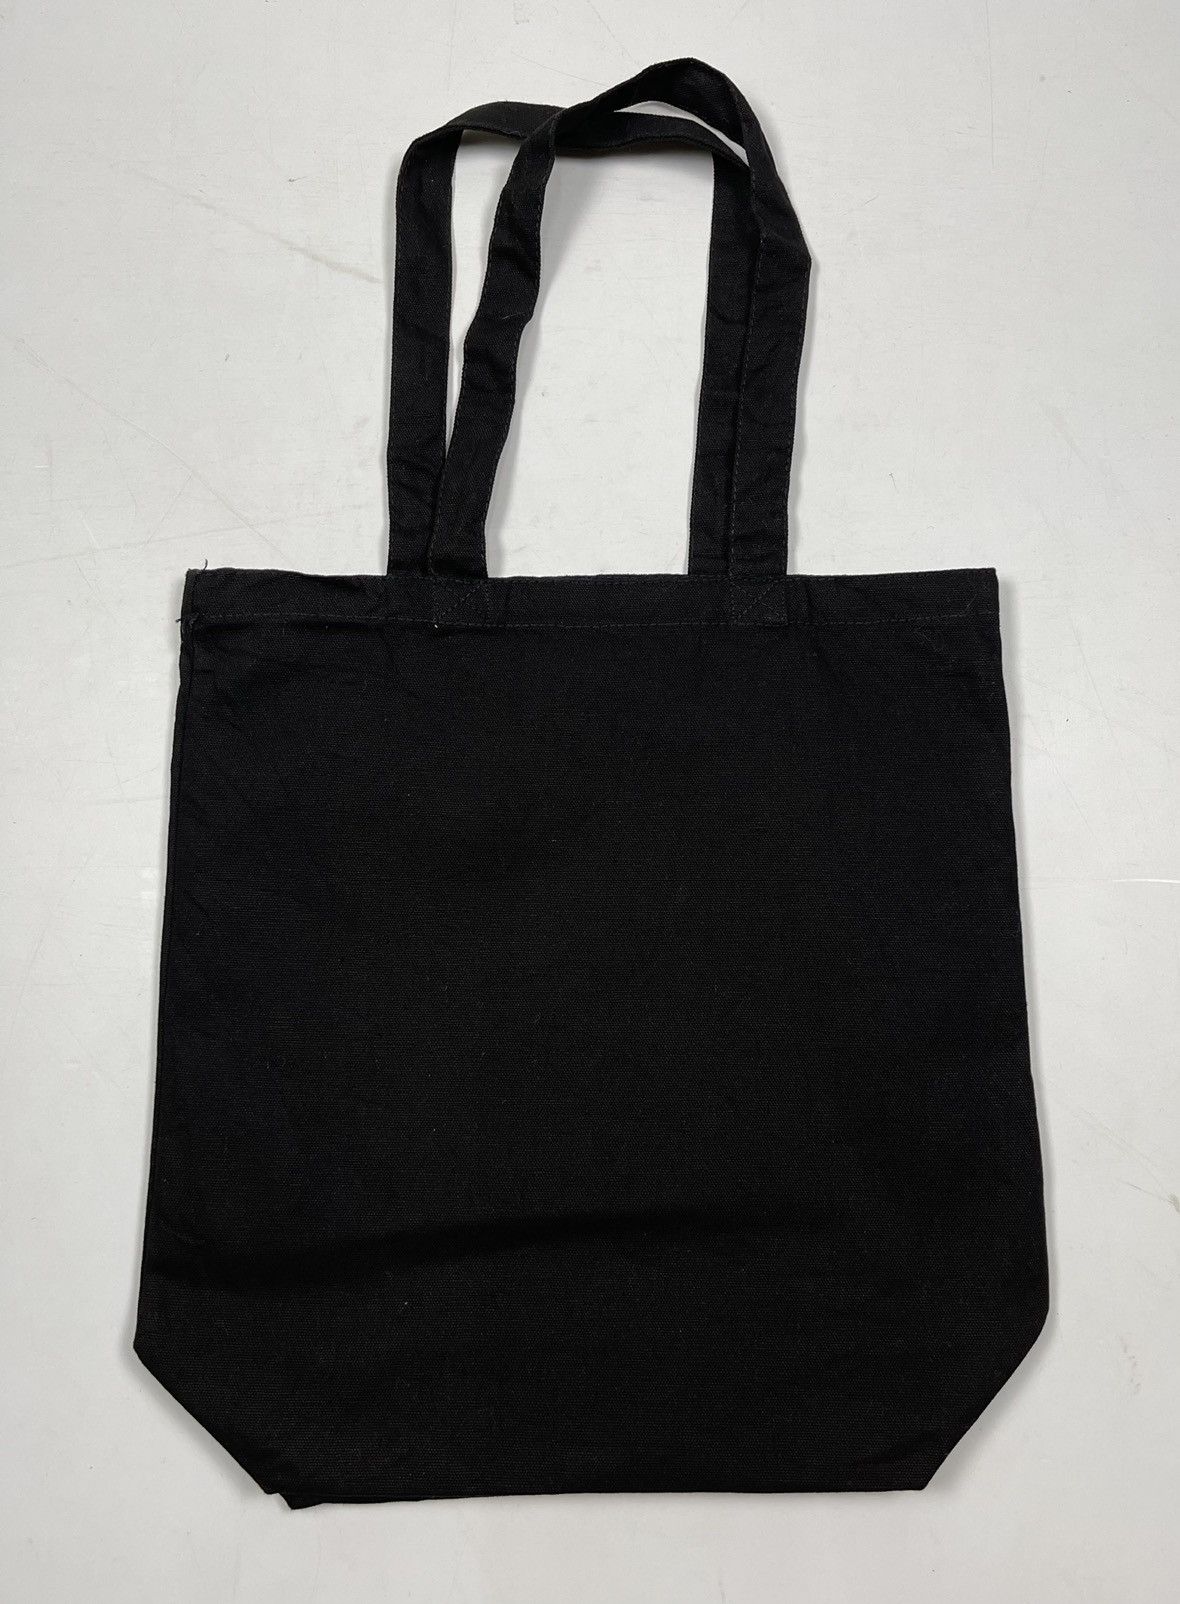 birkenstock tote bag t2 - 5